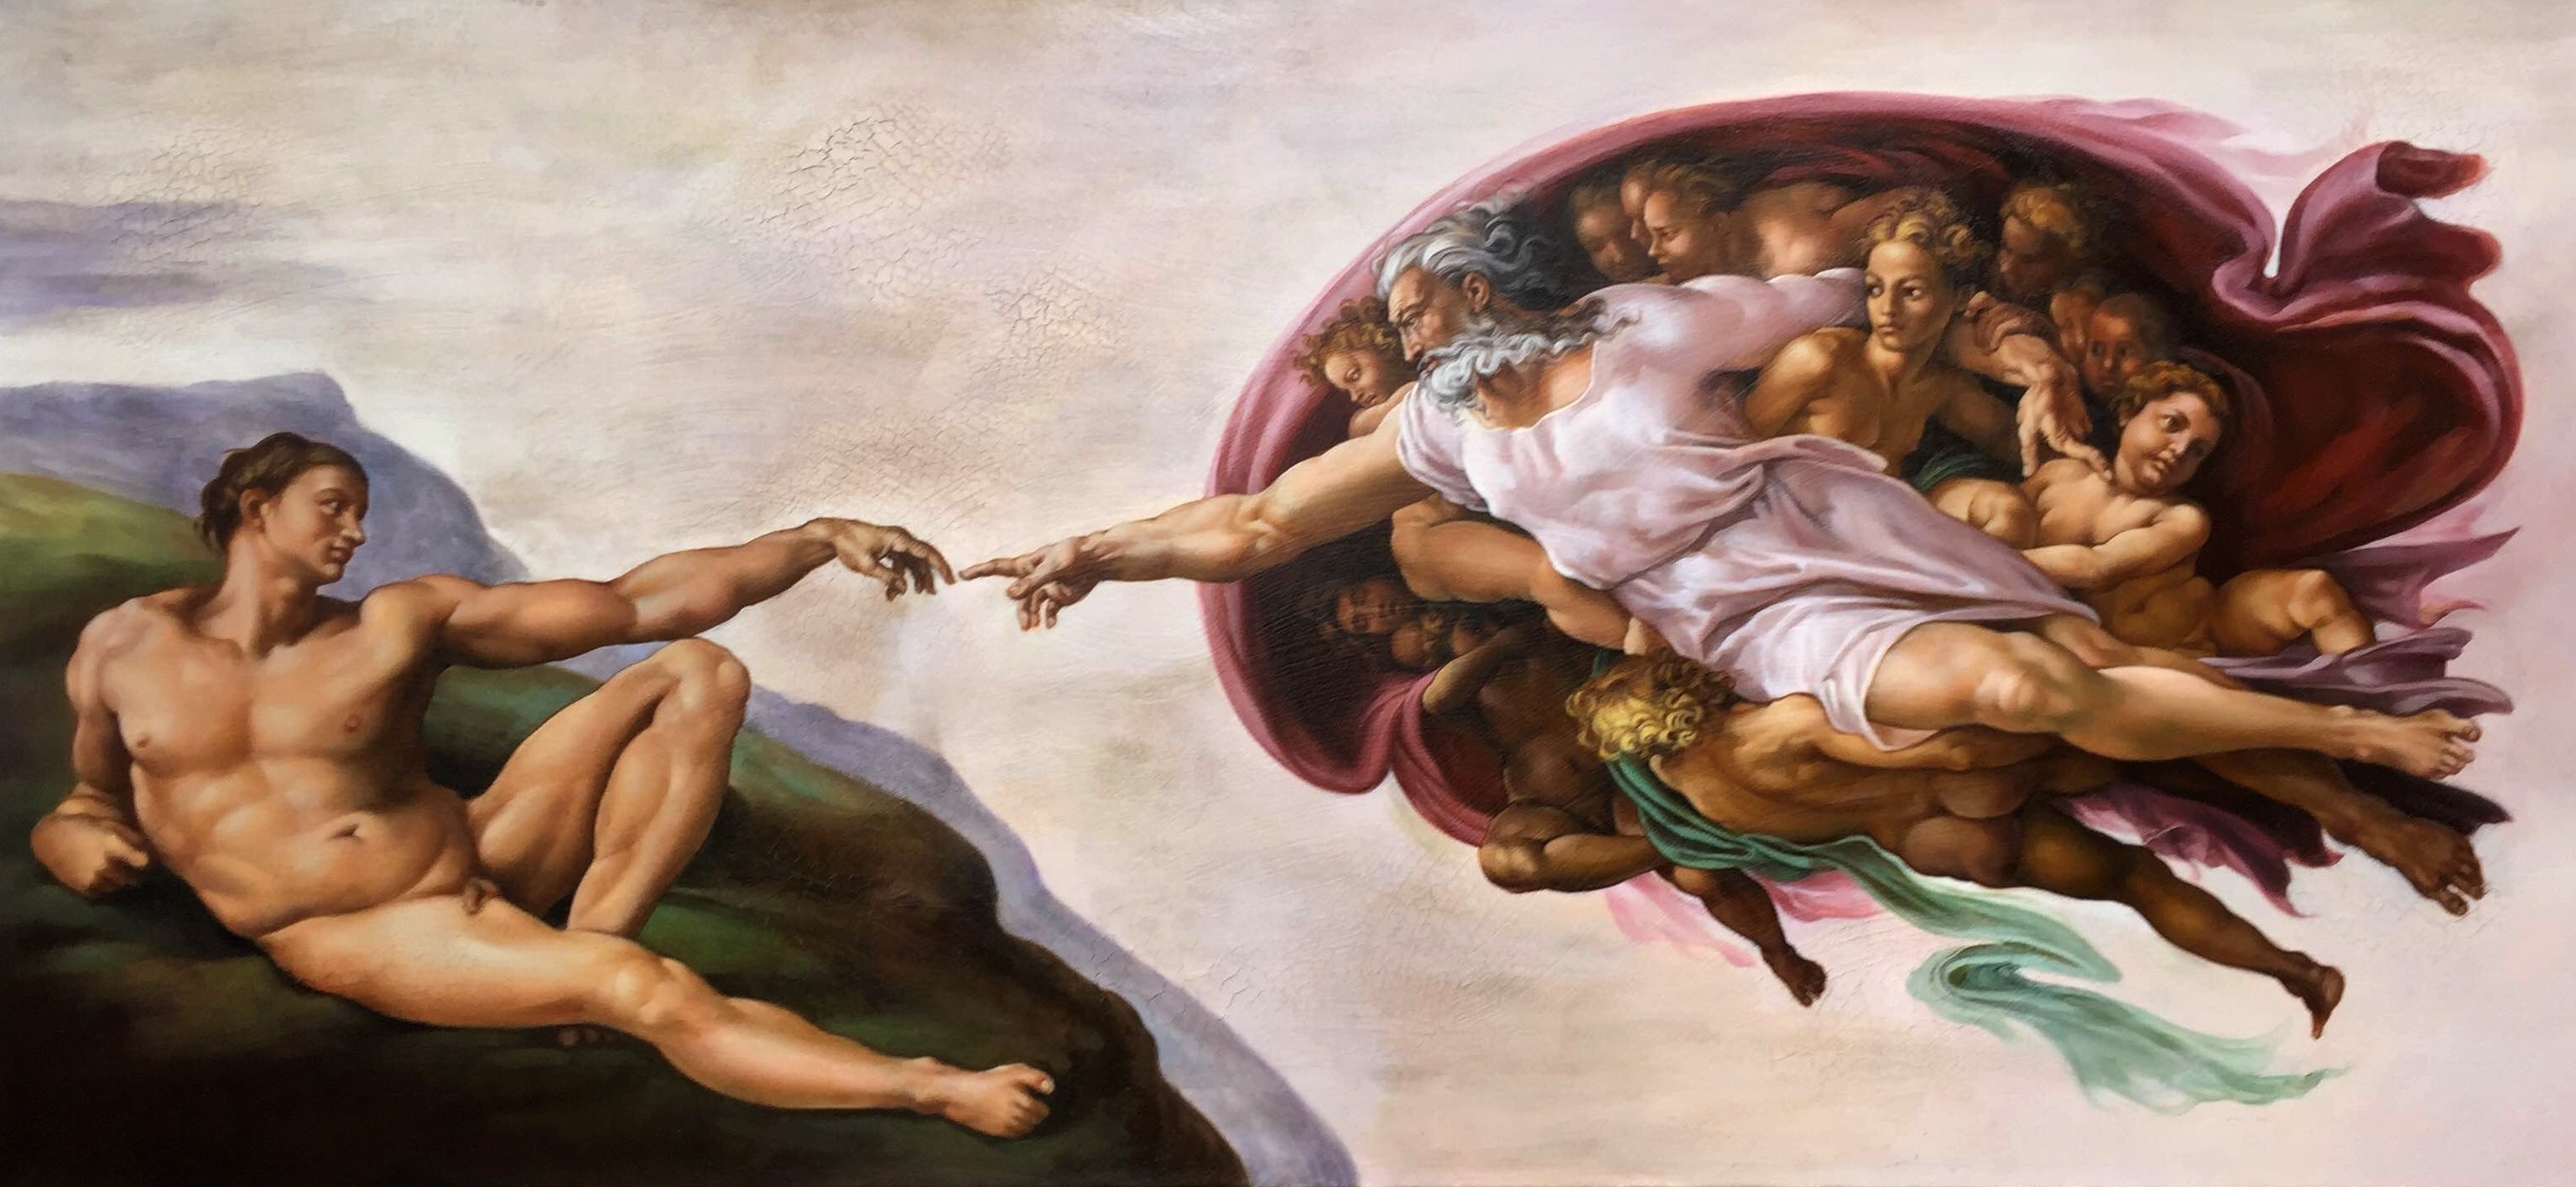 Картина рука тянется к руке микеланджело что означает.